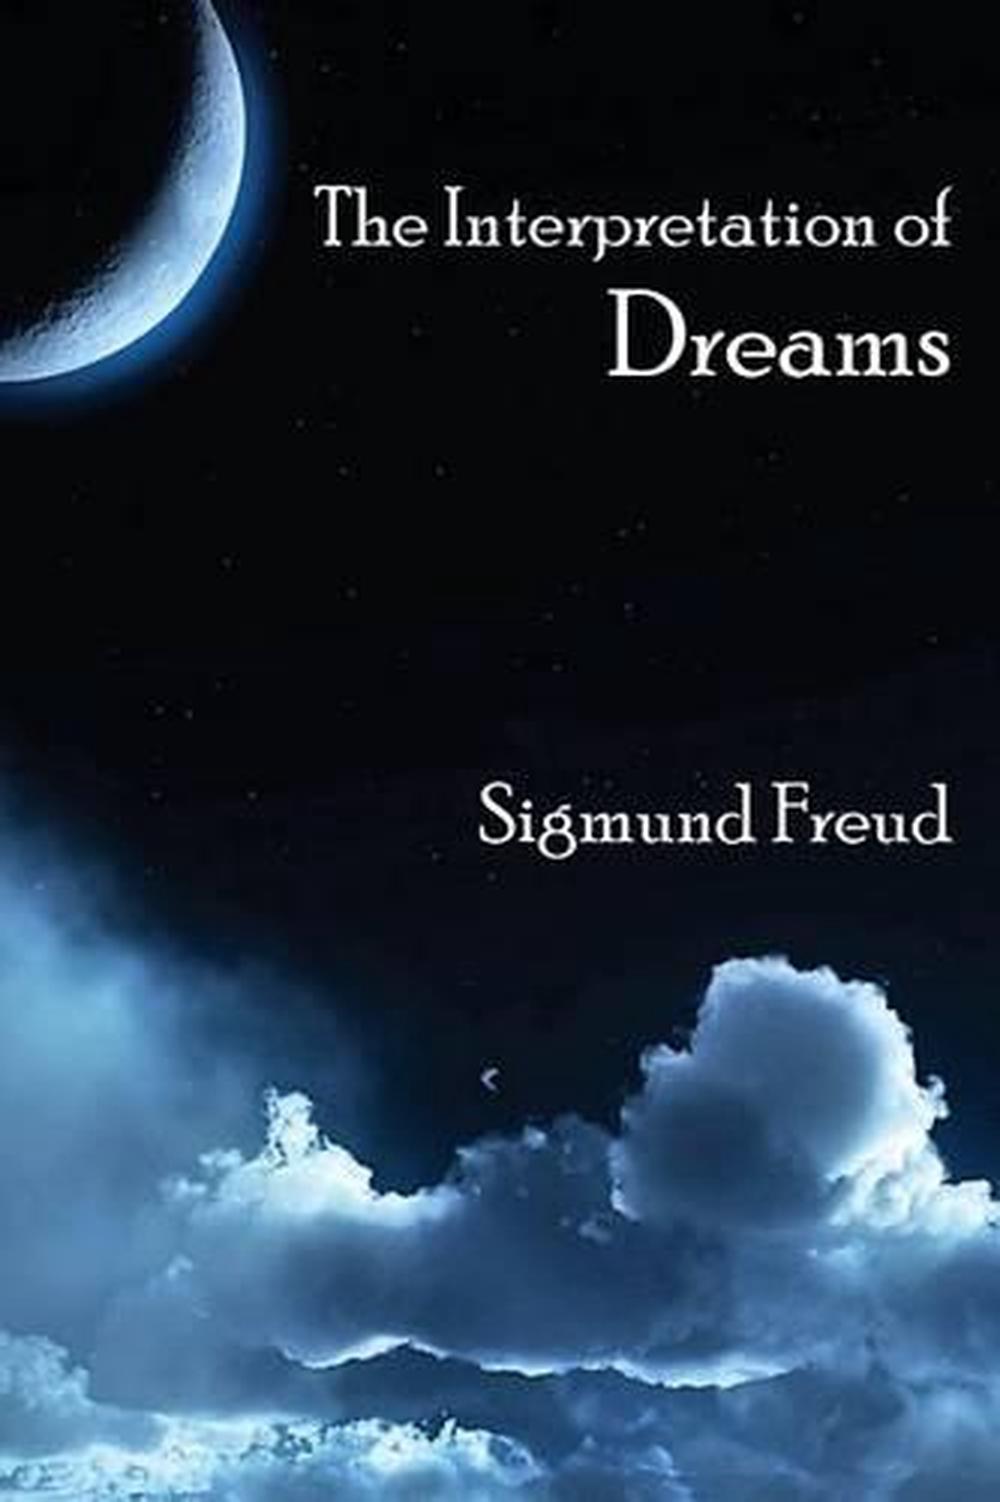 sigmund freud the interpretation of dreams book